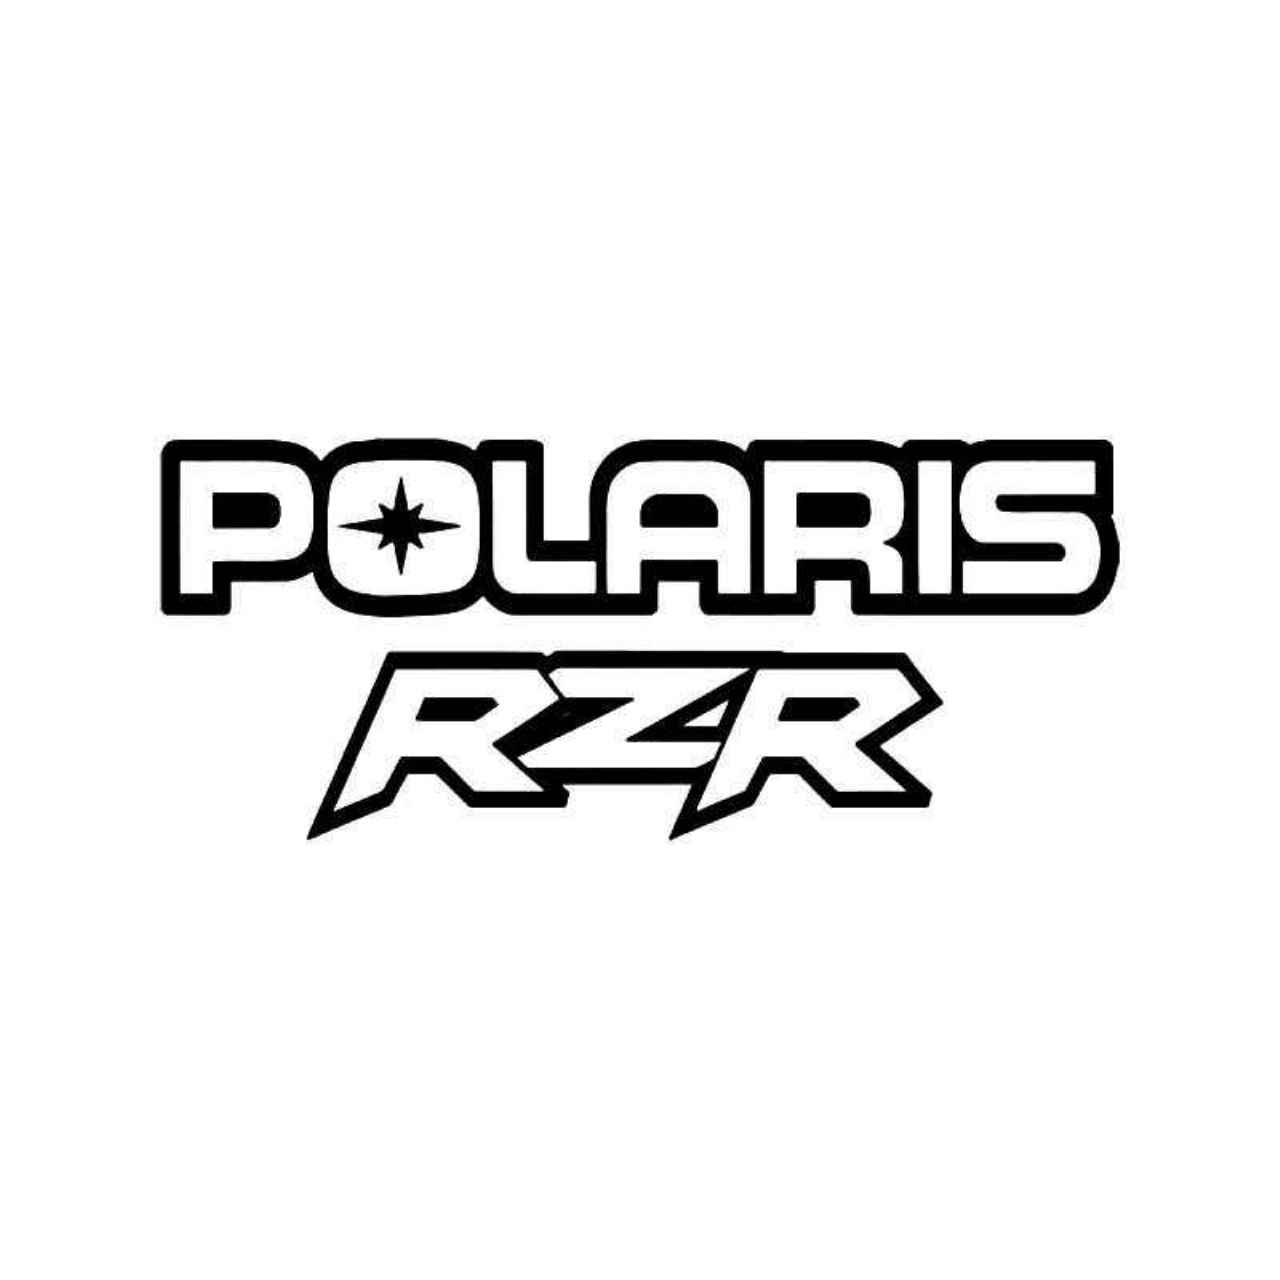 Polaris RZR Logo - Polaris Rzr Utv 1 Vinyl Decal Sticker